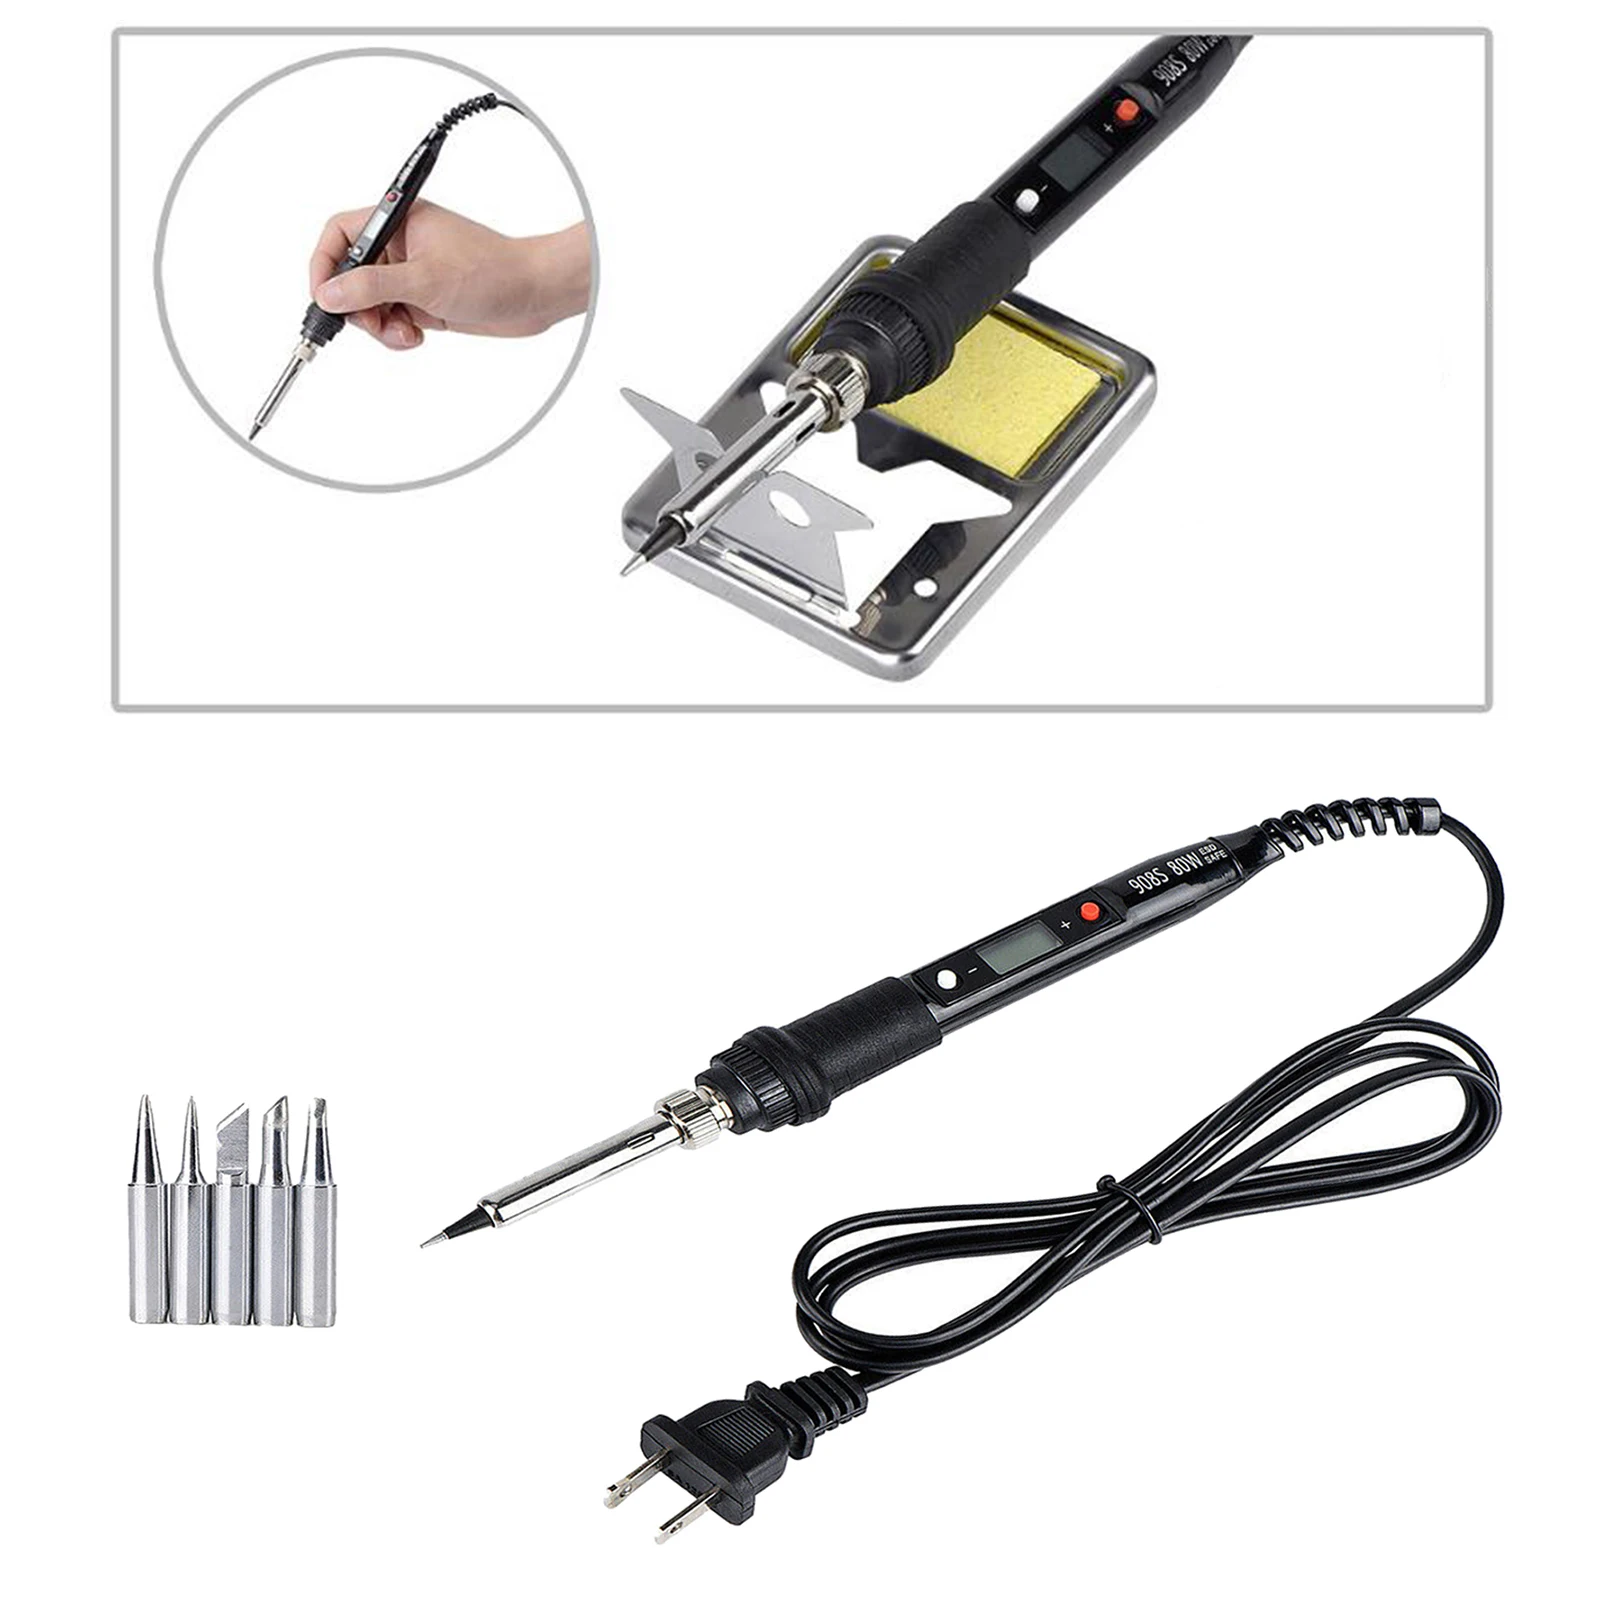 Electric Soldering Iron Kit with 5 Solder Tips Digital Solder Gun for DIY Hobby Projectsm Jewelry Repairing, US Plug